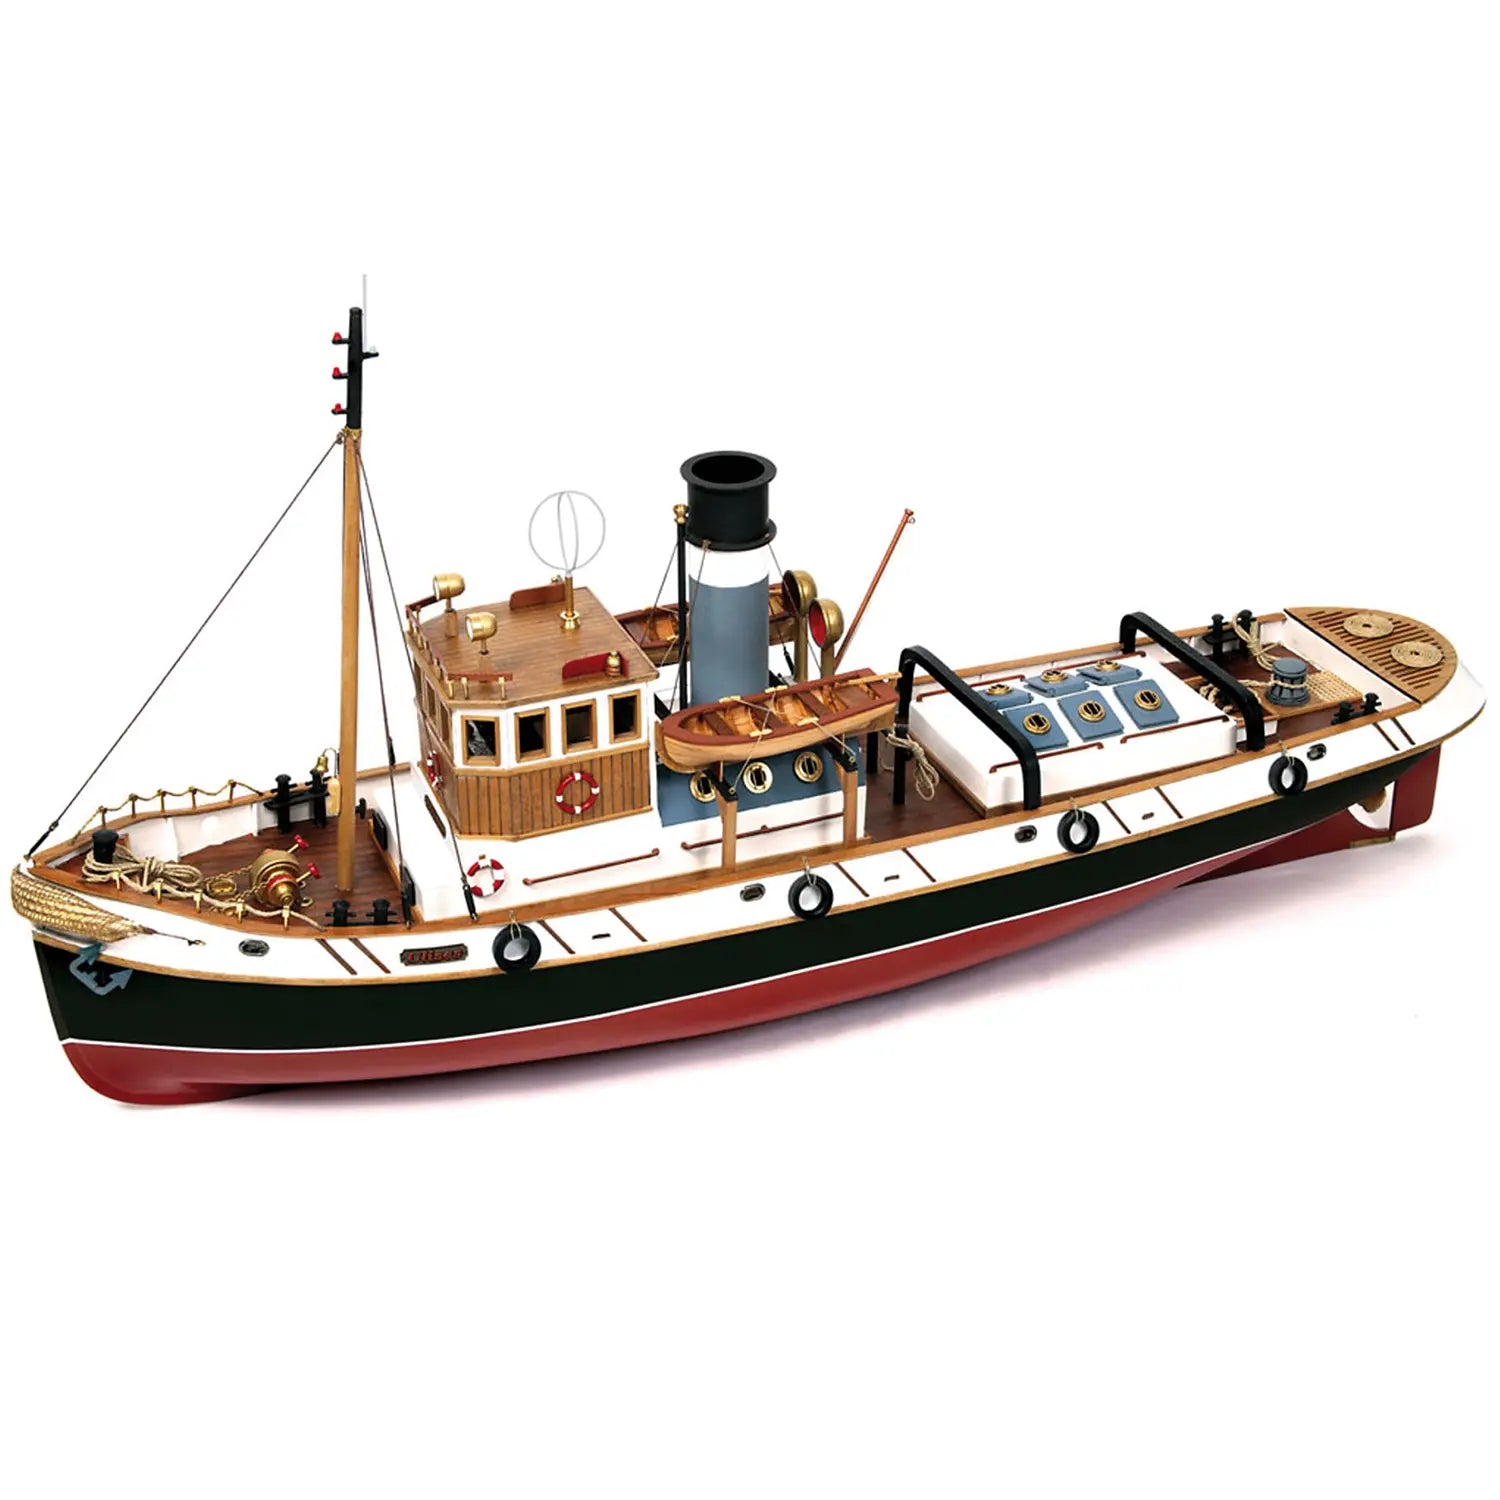 Model Making Tools & Modeling Kits - Premier Ship Models US